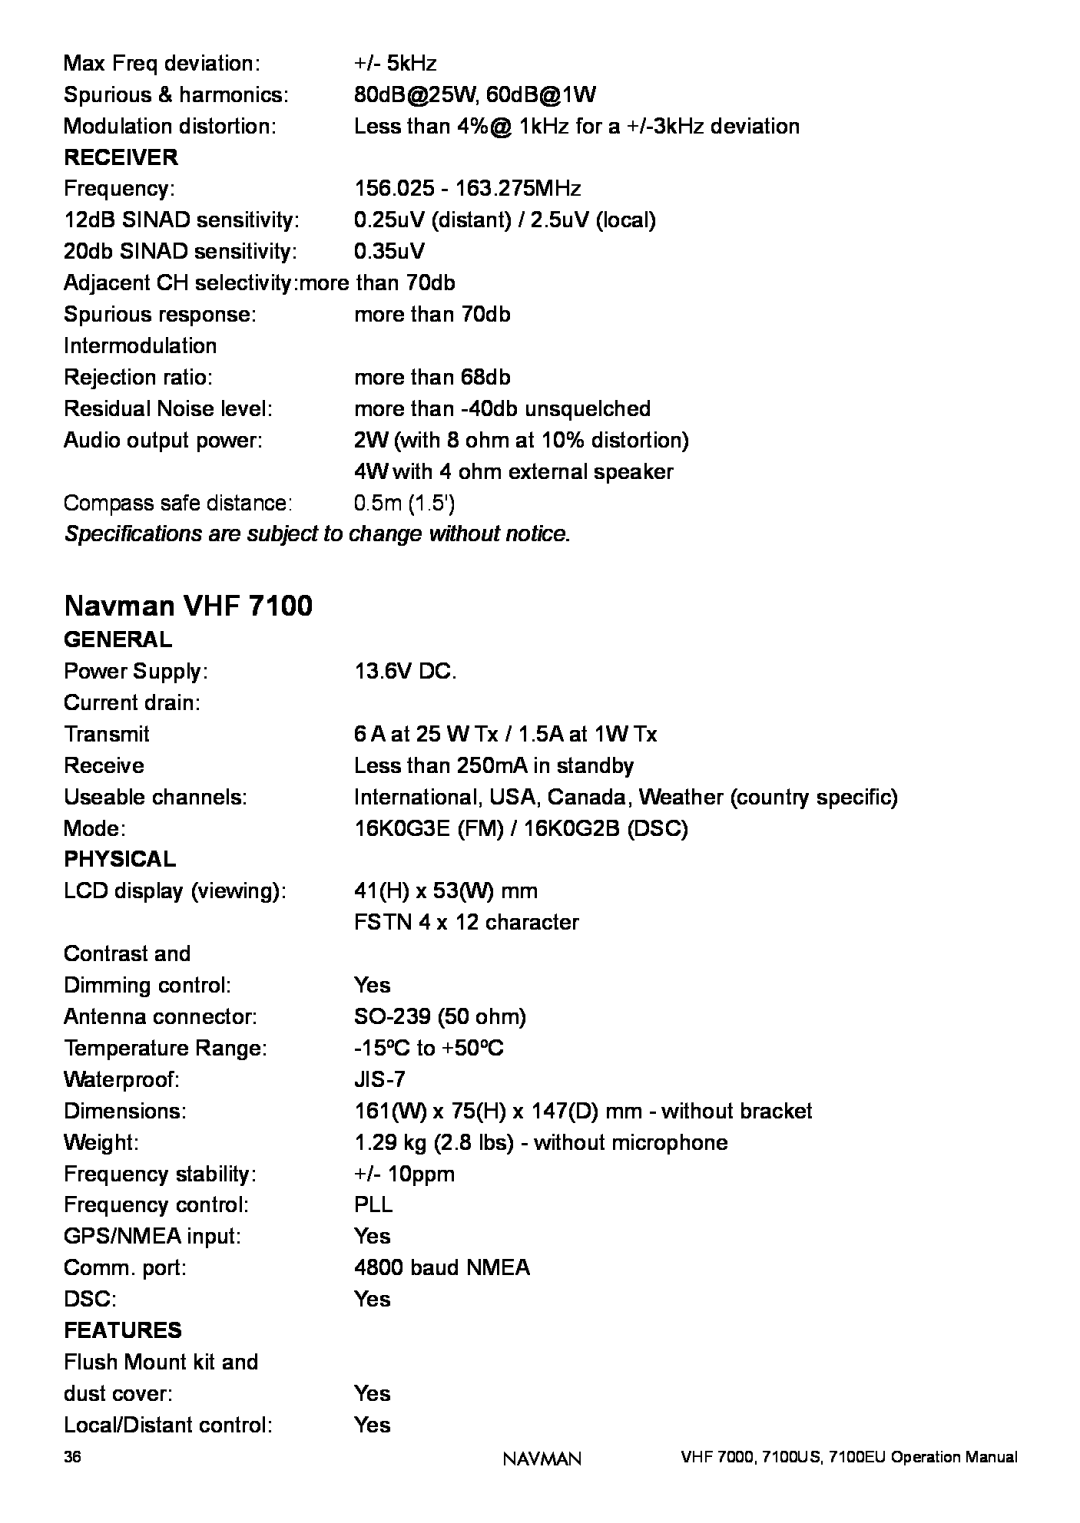 Navman 7100EU, 7000, 7100US operation manual Navman VHF, Receiver, General, Physical, Features 